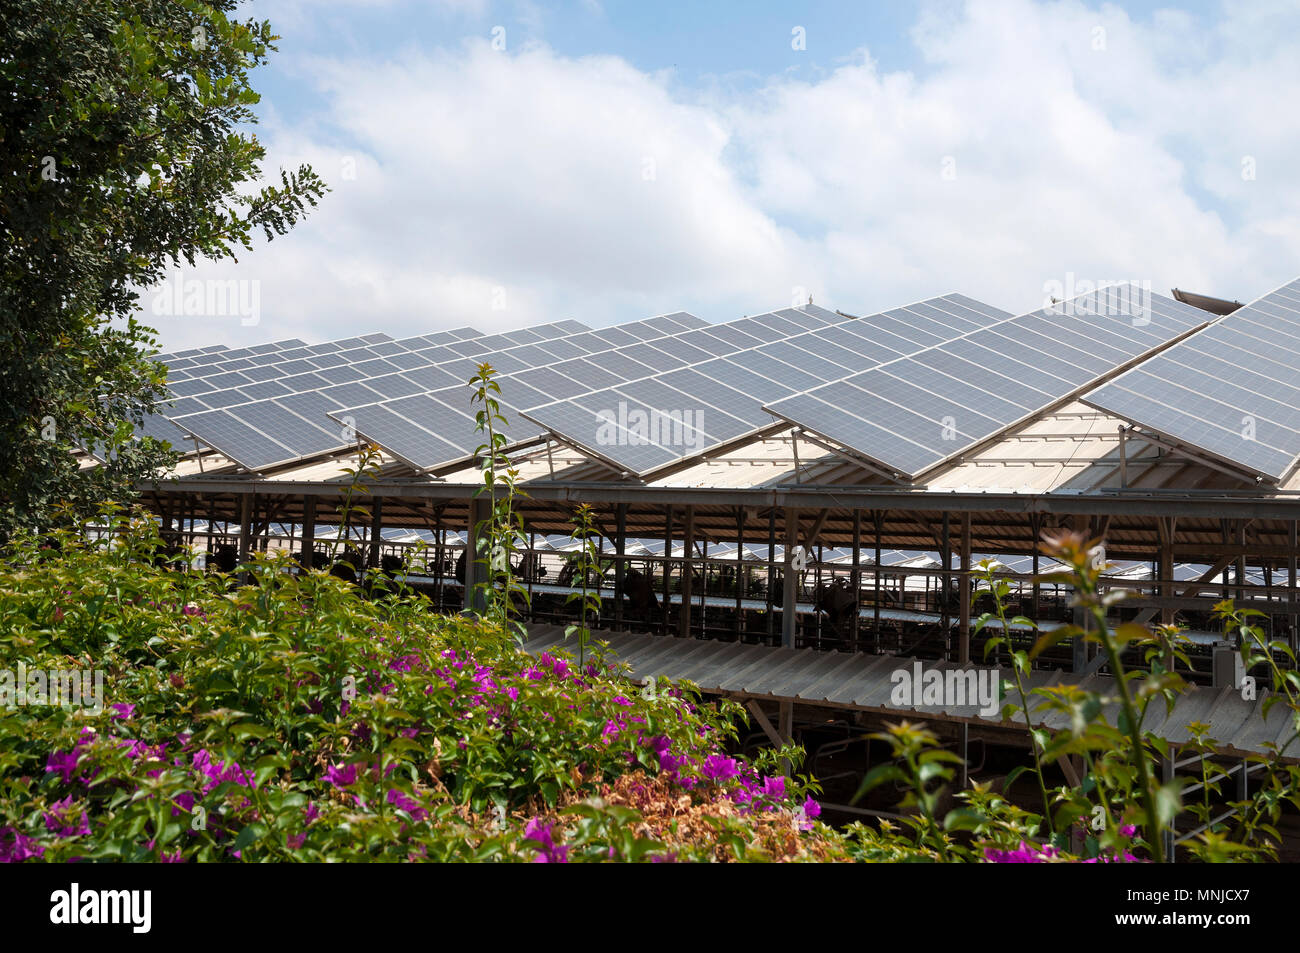 green-energy-solar-panels-on-roof-stock-photo-alamy